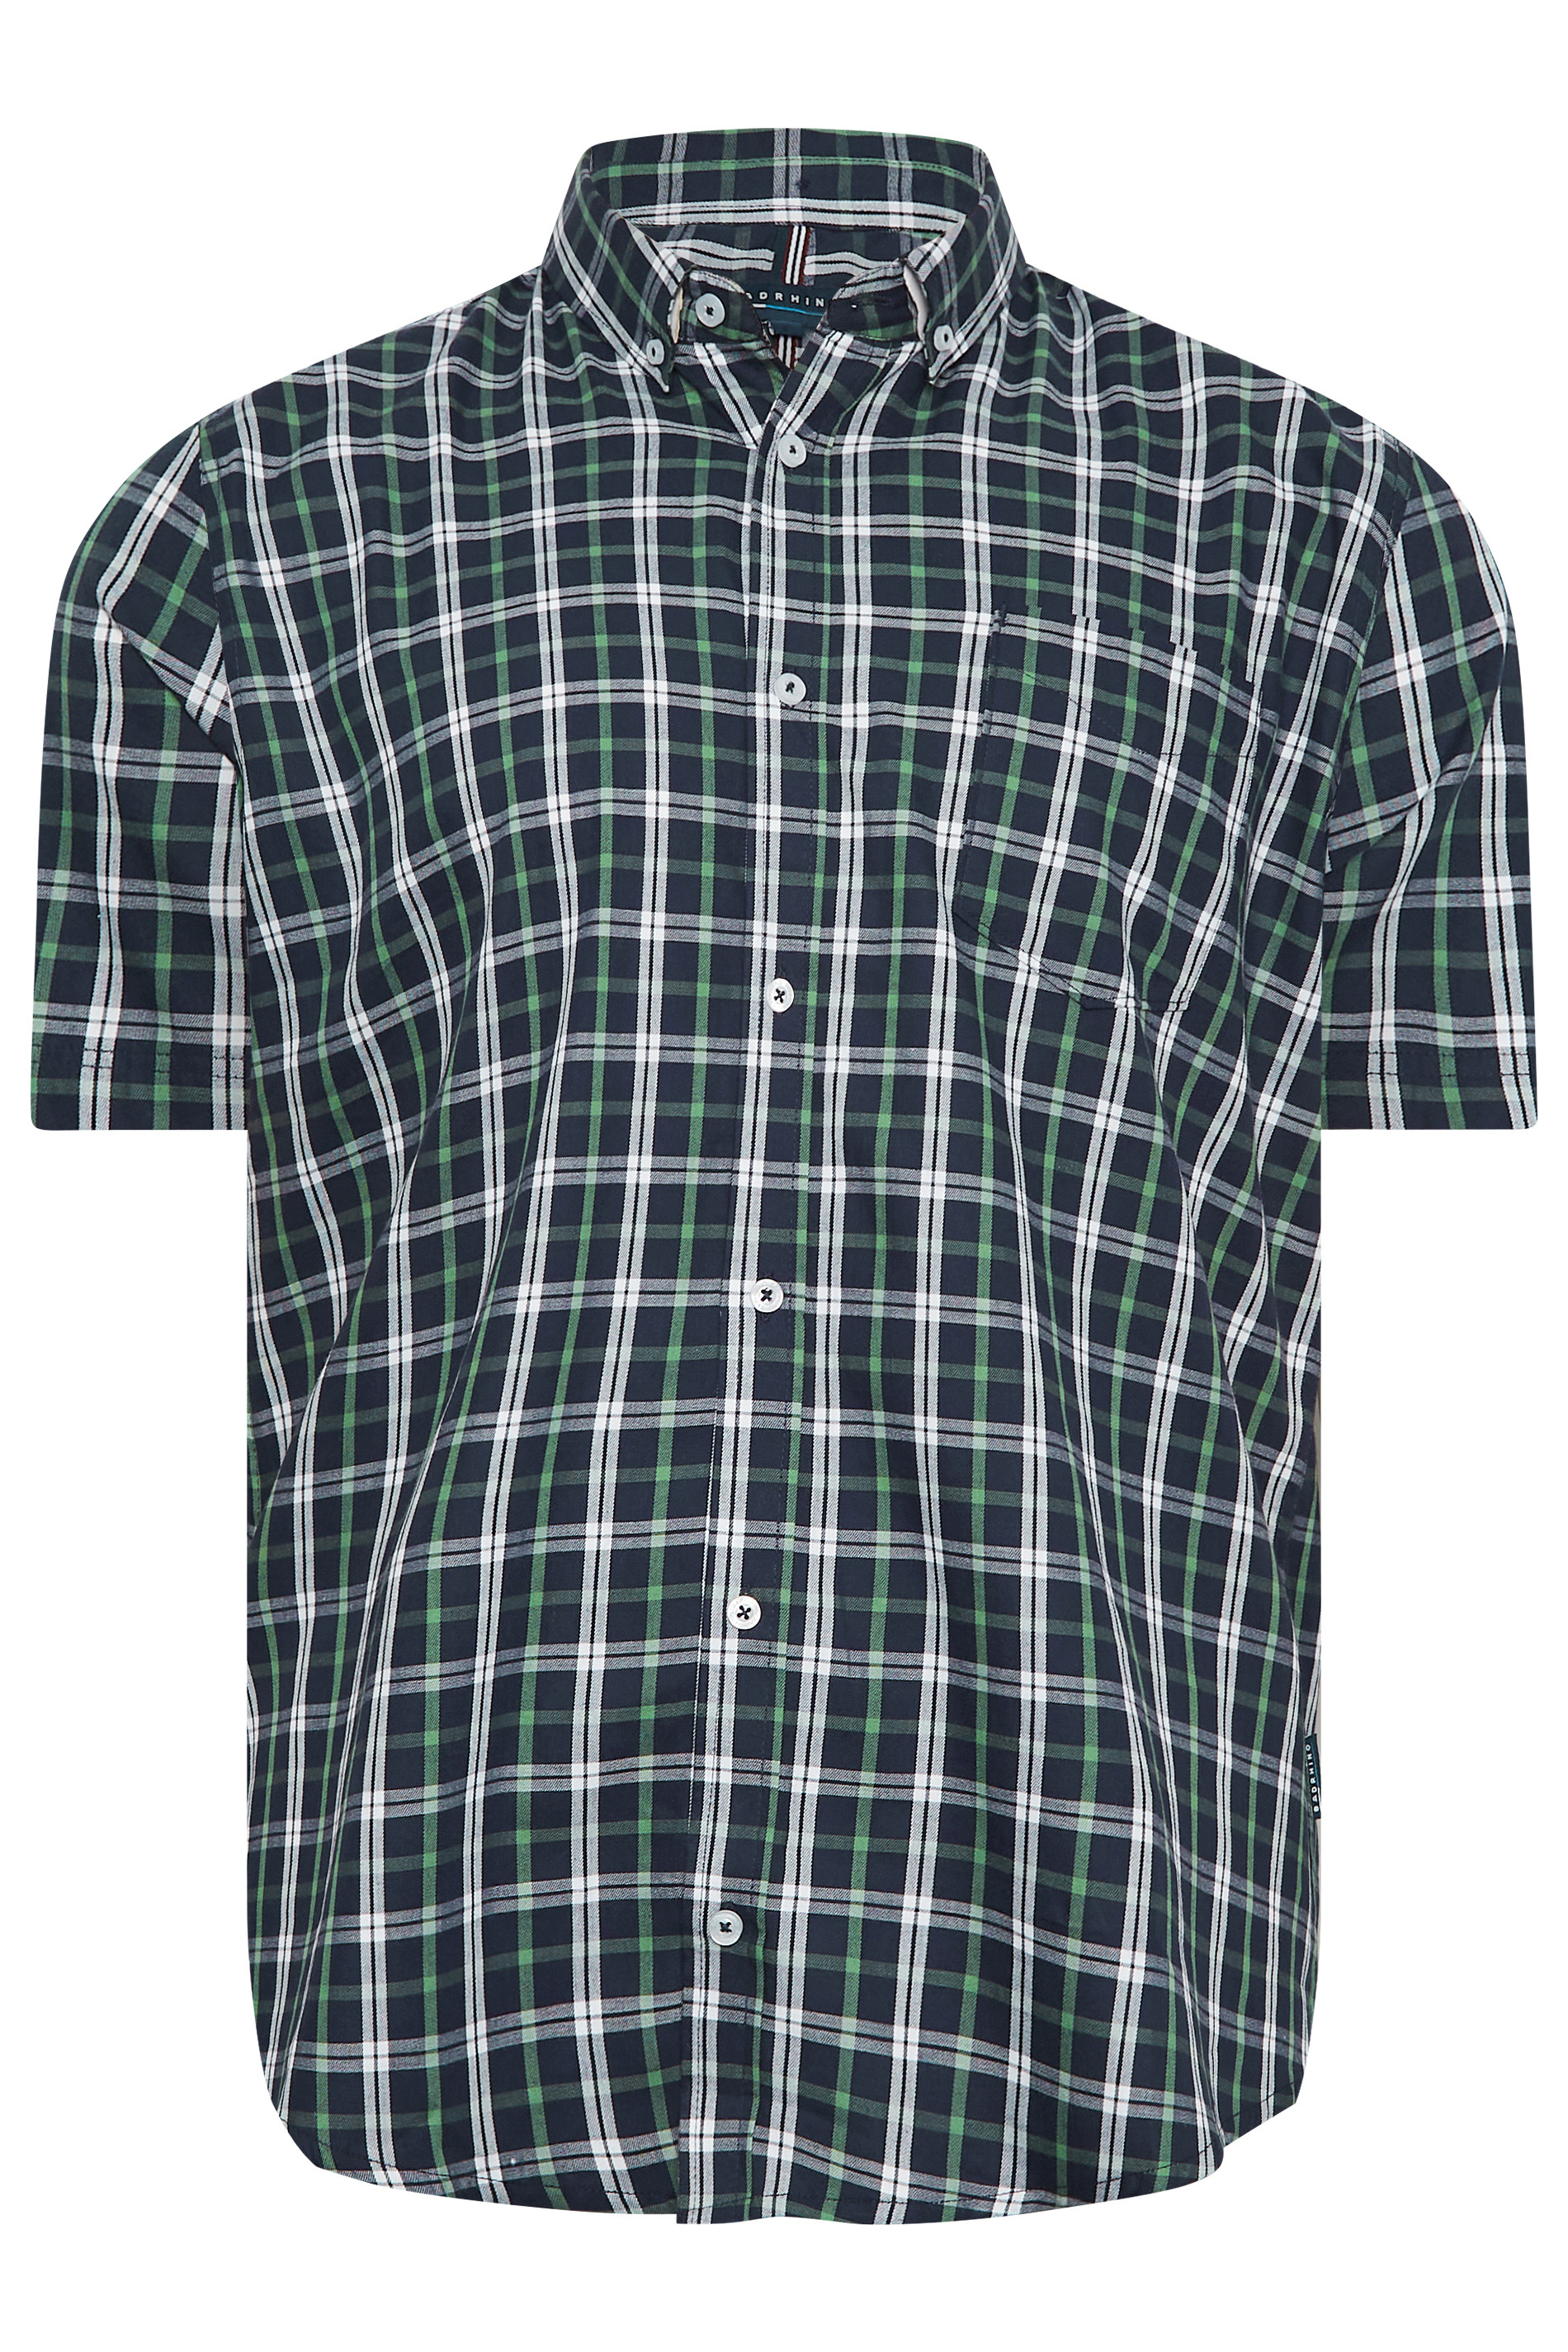 BadRhino Big & Tall Navy Blue Short Sleeve Check Shirt | BadRhino 3